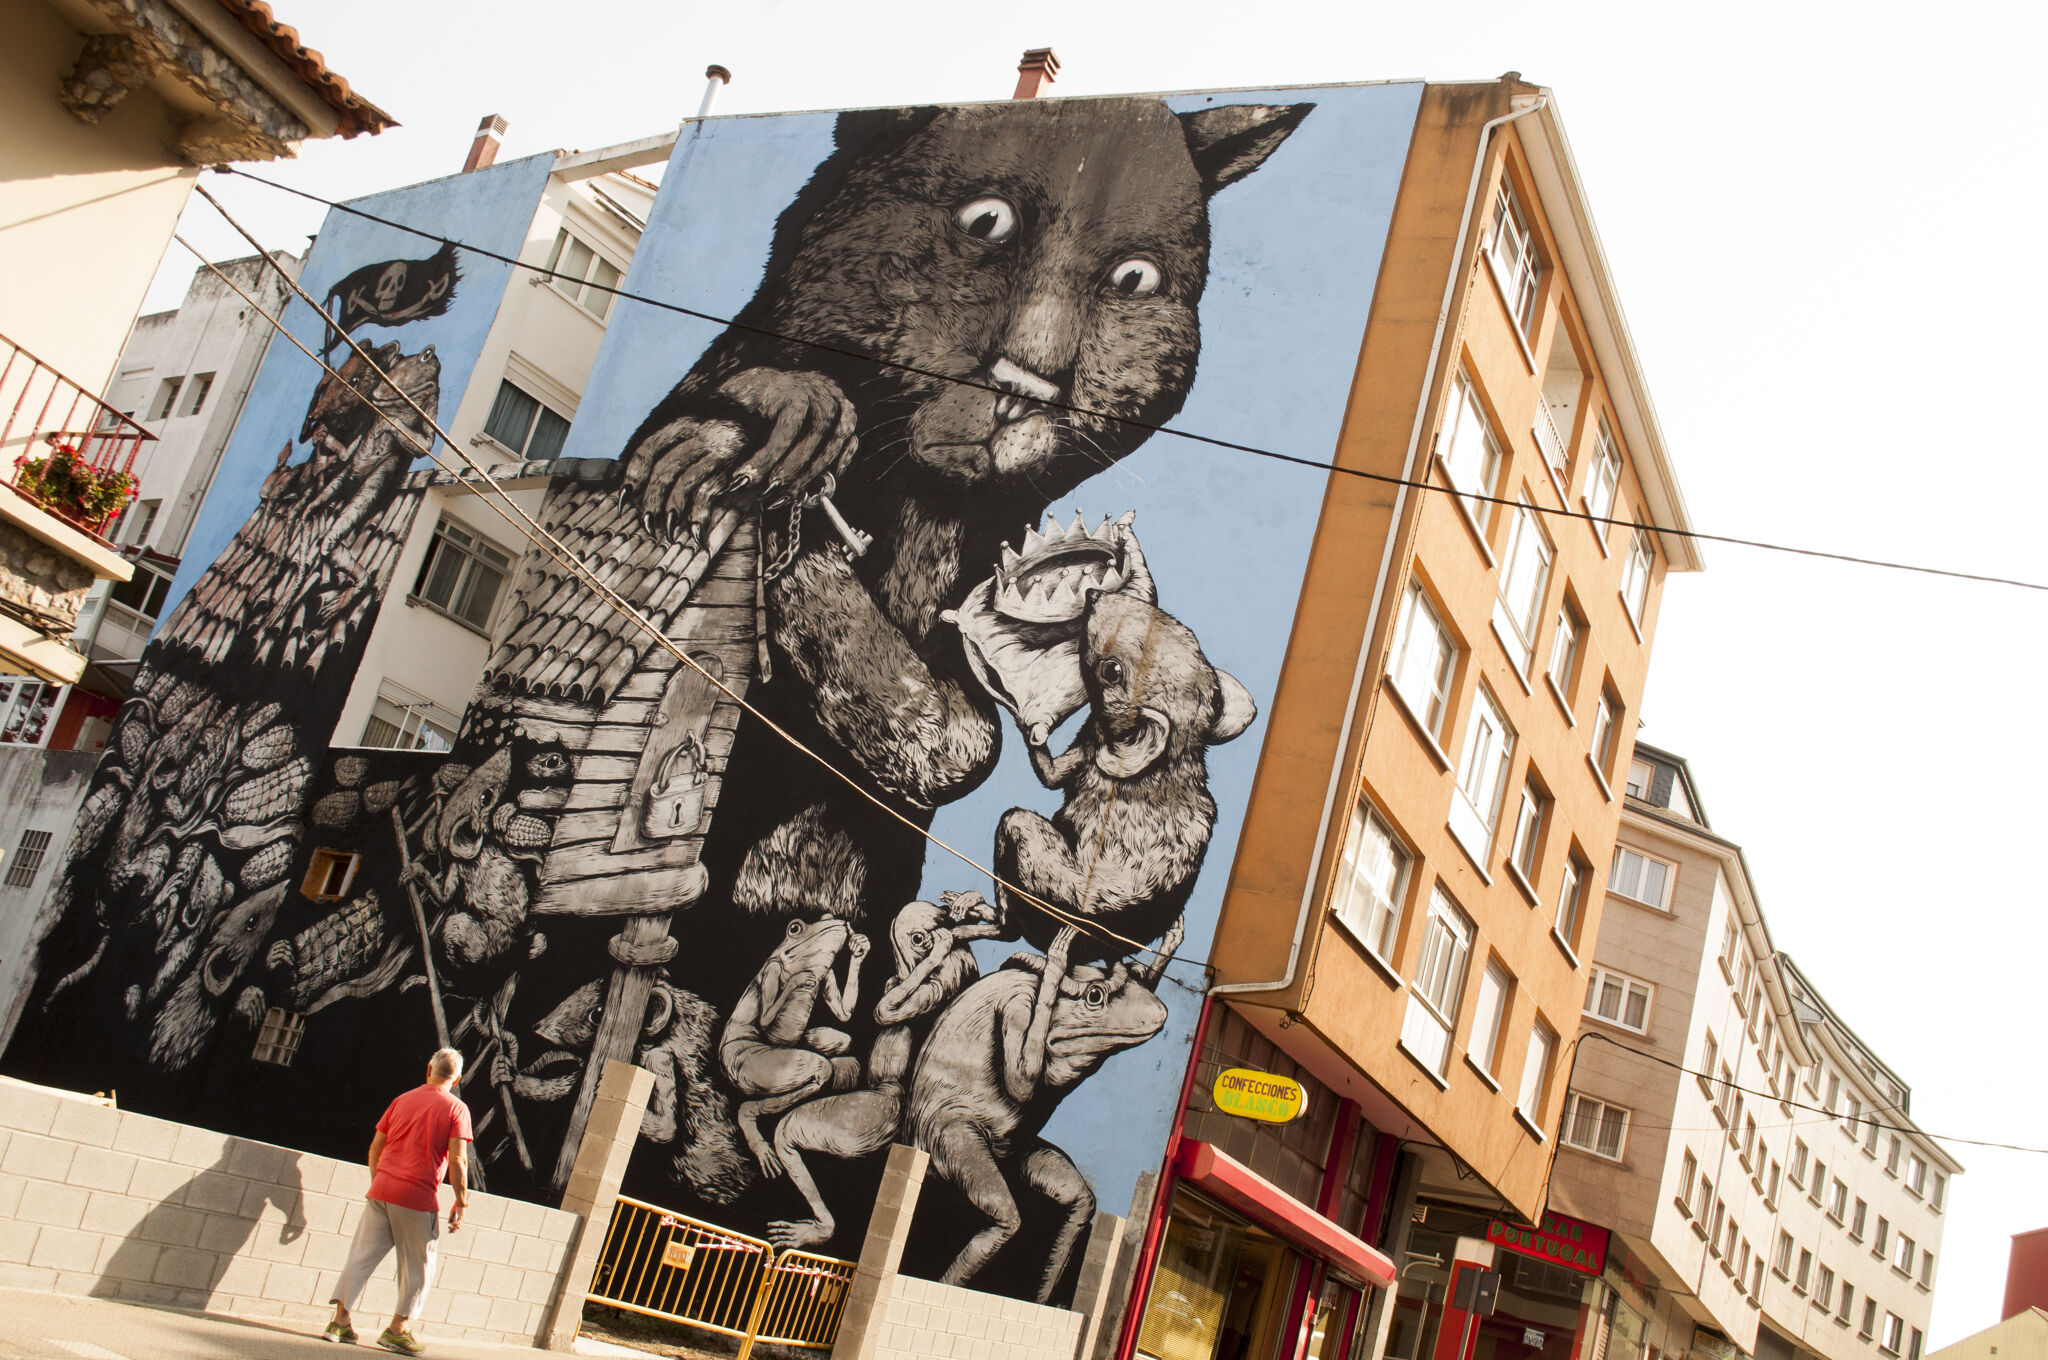 Erica Il cane&mdash;Wall by ERICA IL CANE for DESORDES CREATIVAS 2017 in Ordes (Galicia-Spain)